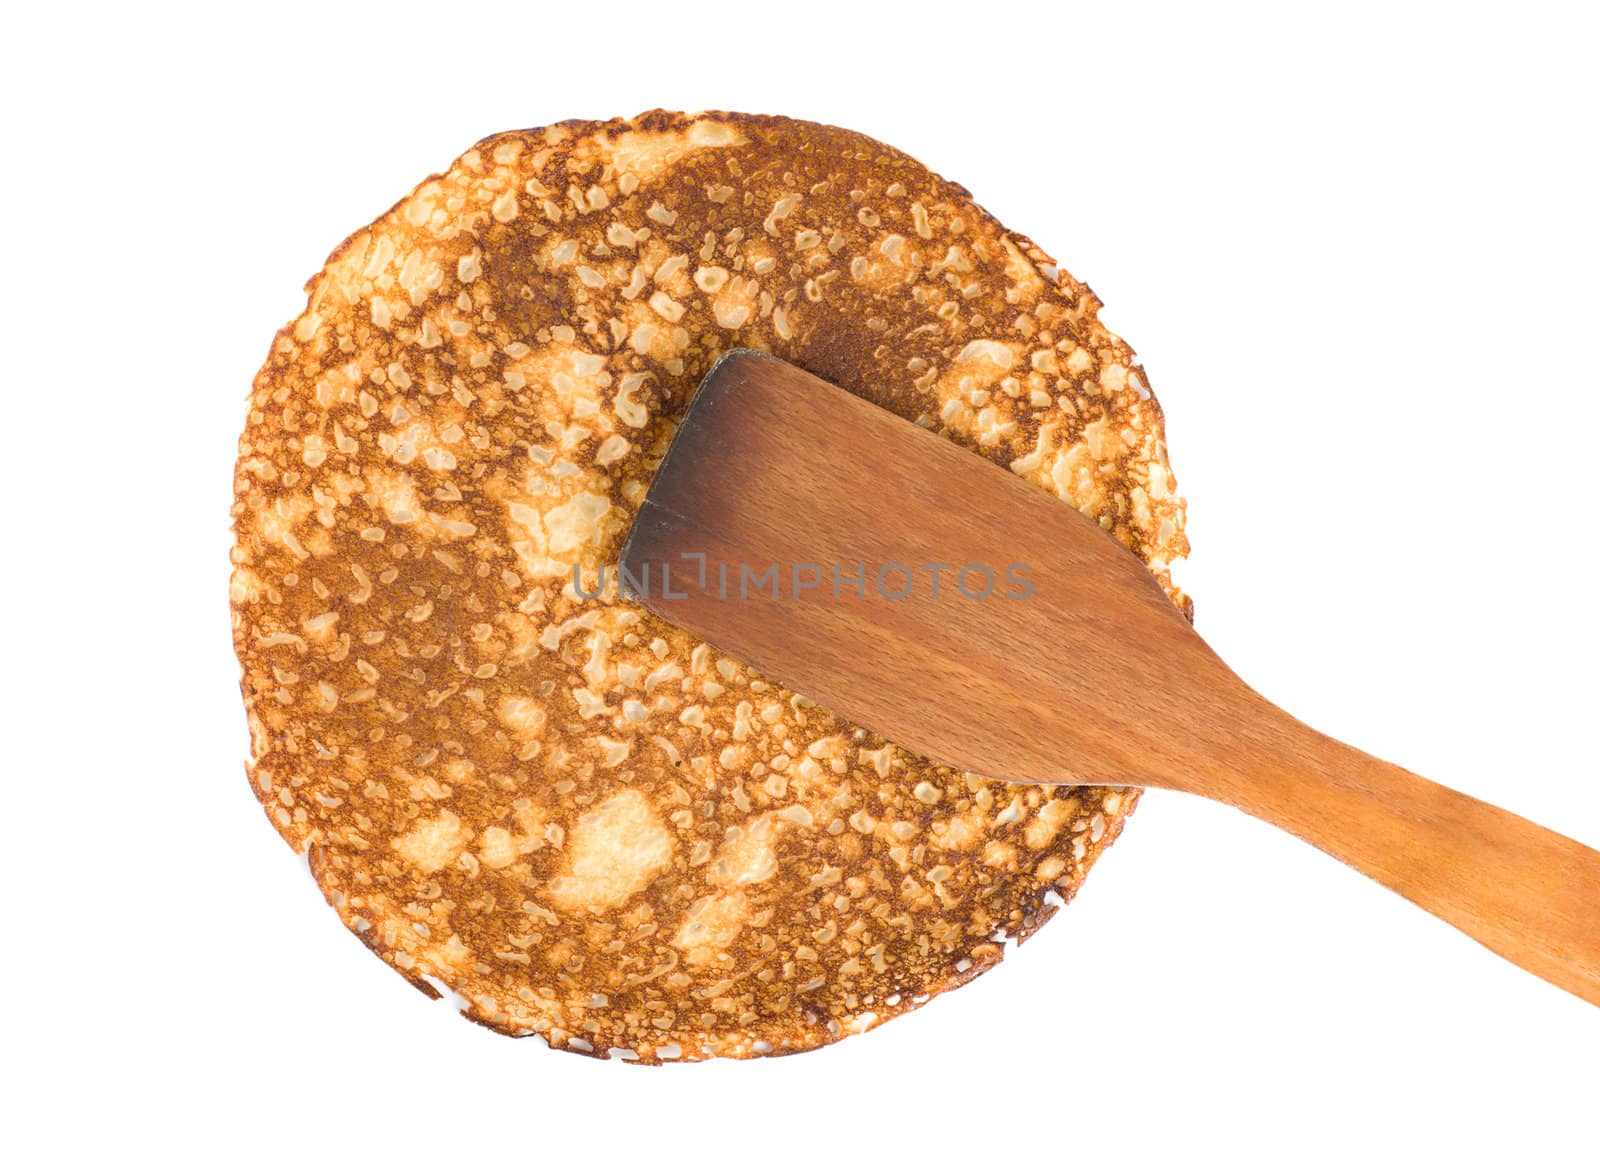 Pancake with a spatula by Givaga